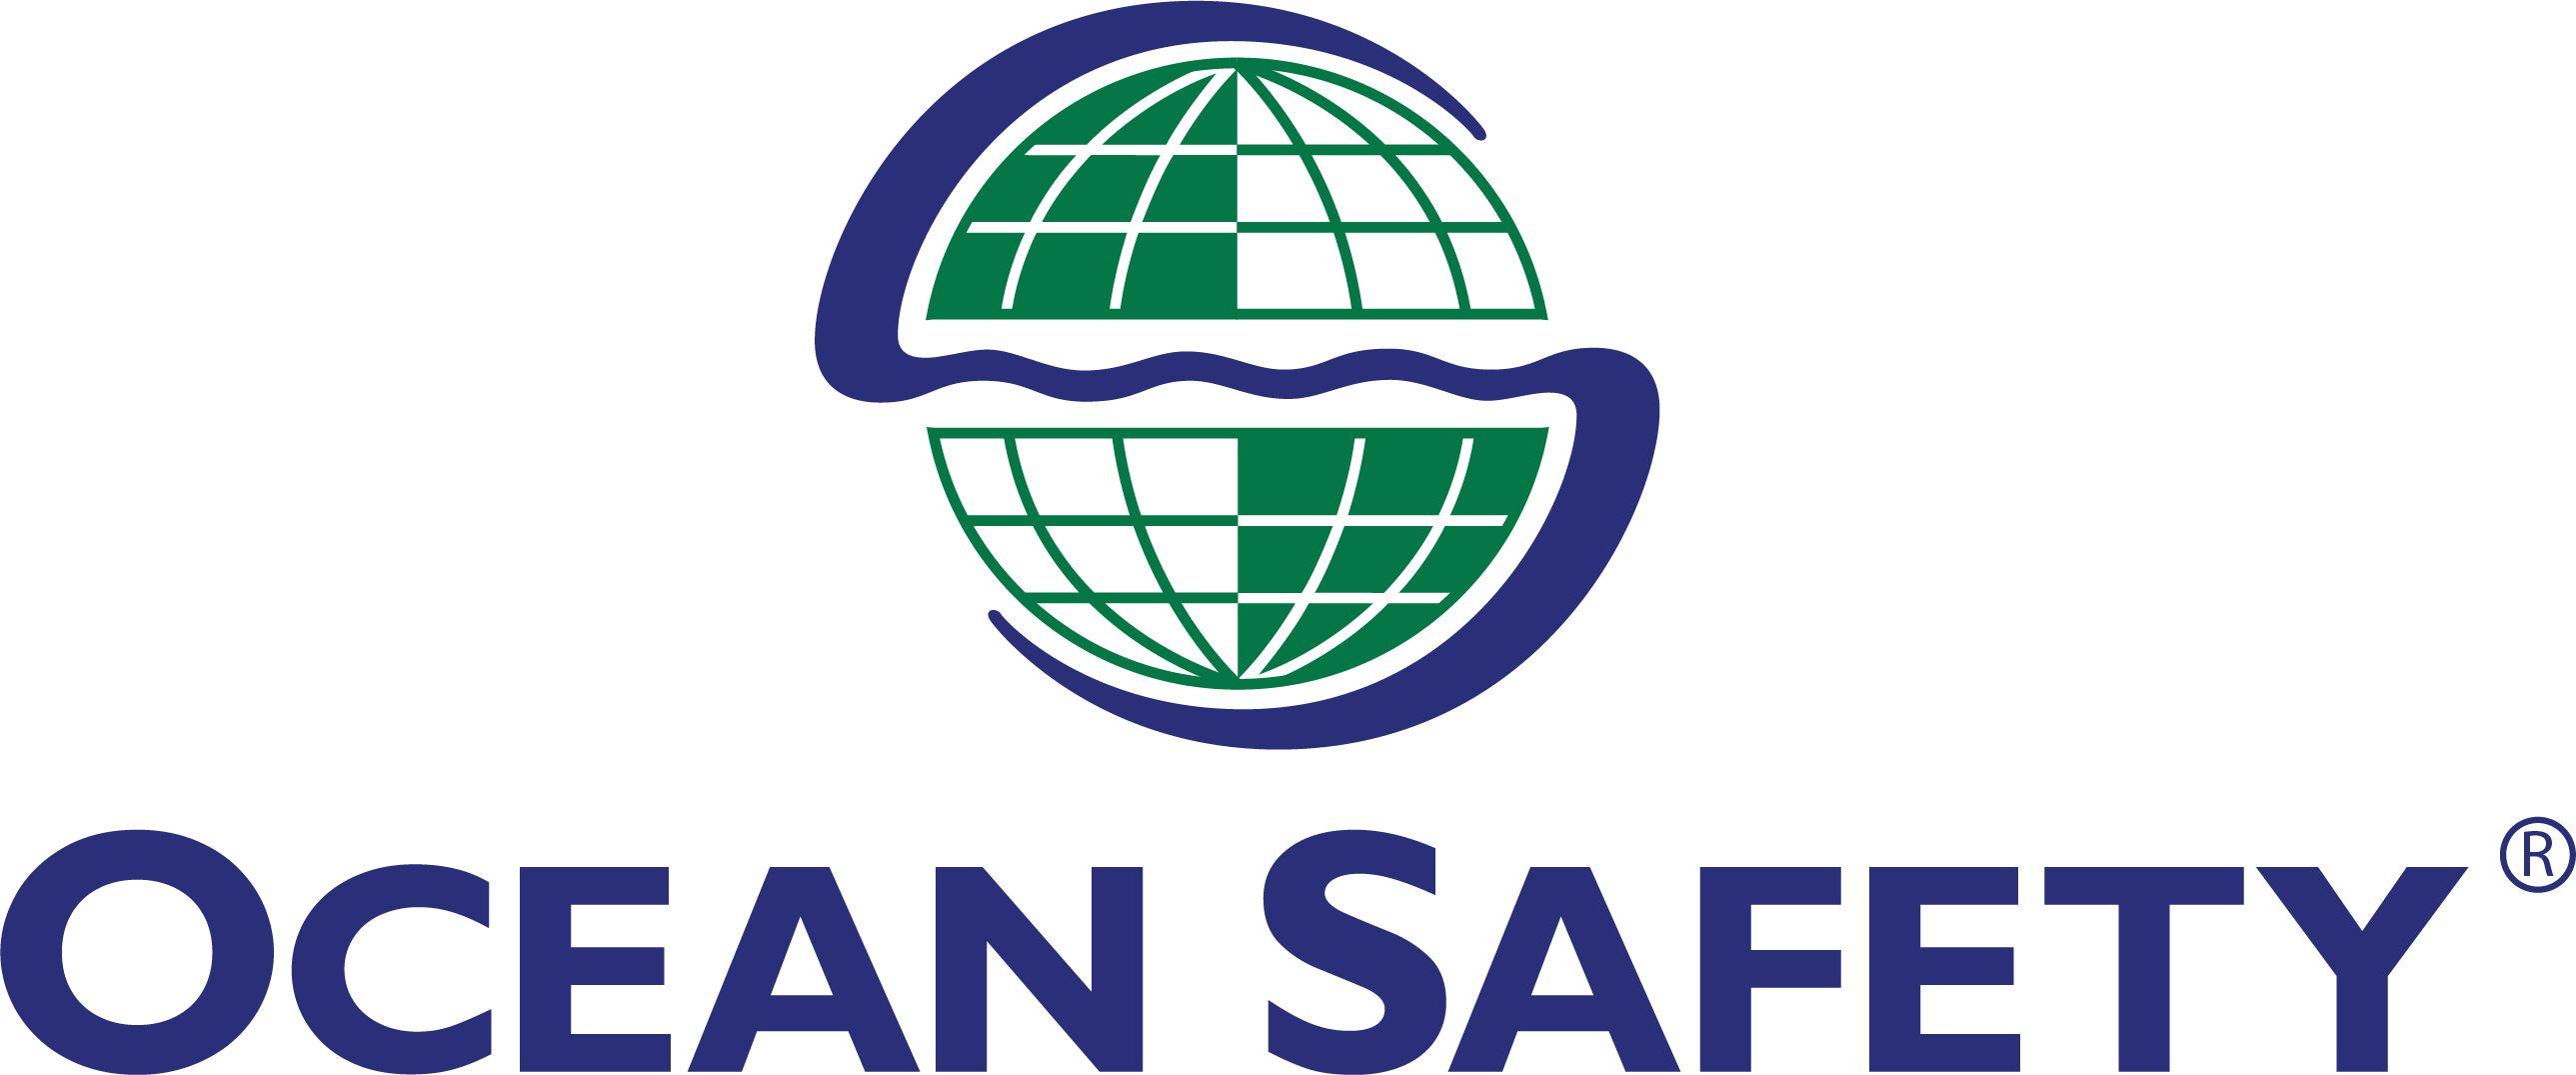 Ocean Company Logo - Ocean Safety Ltd